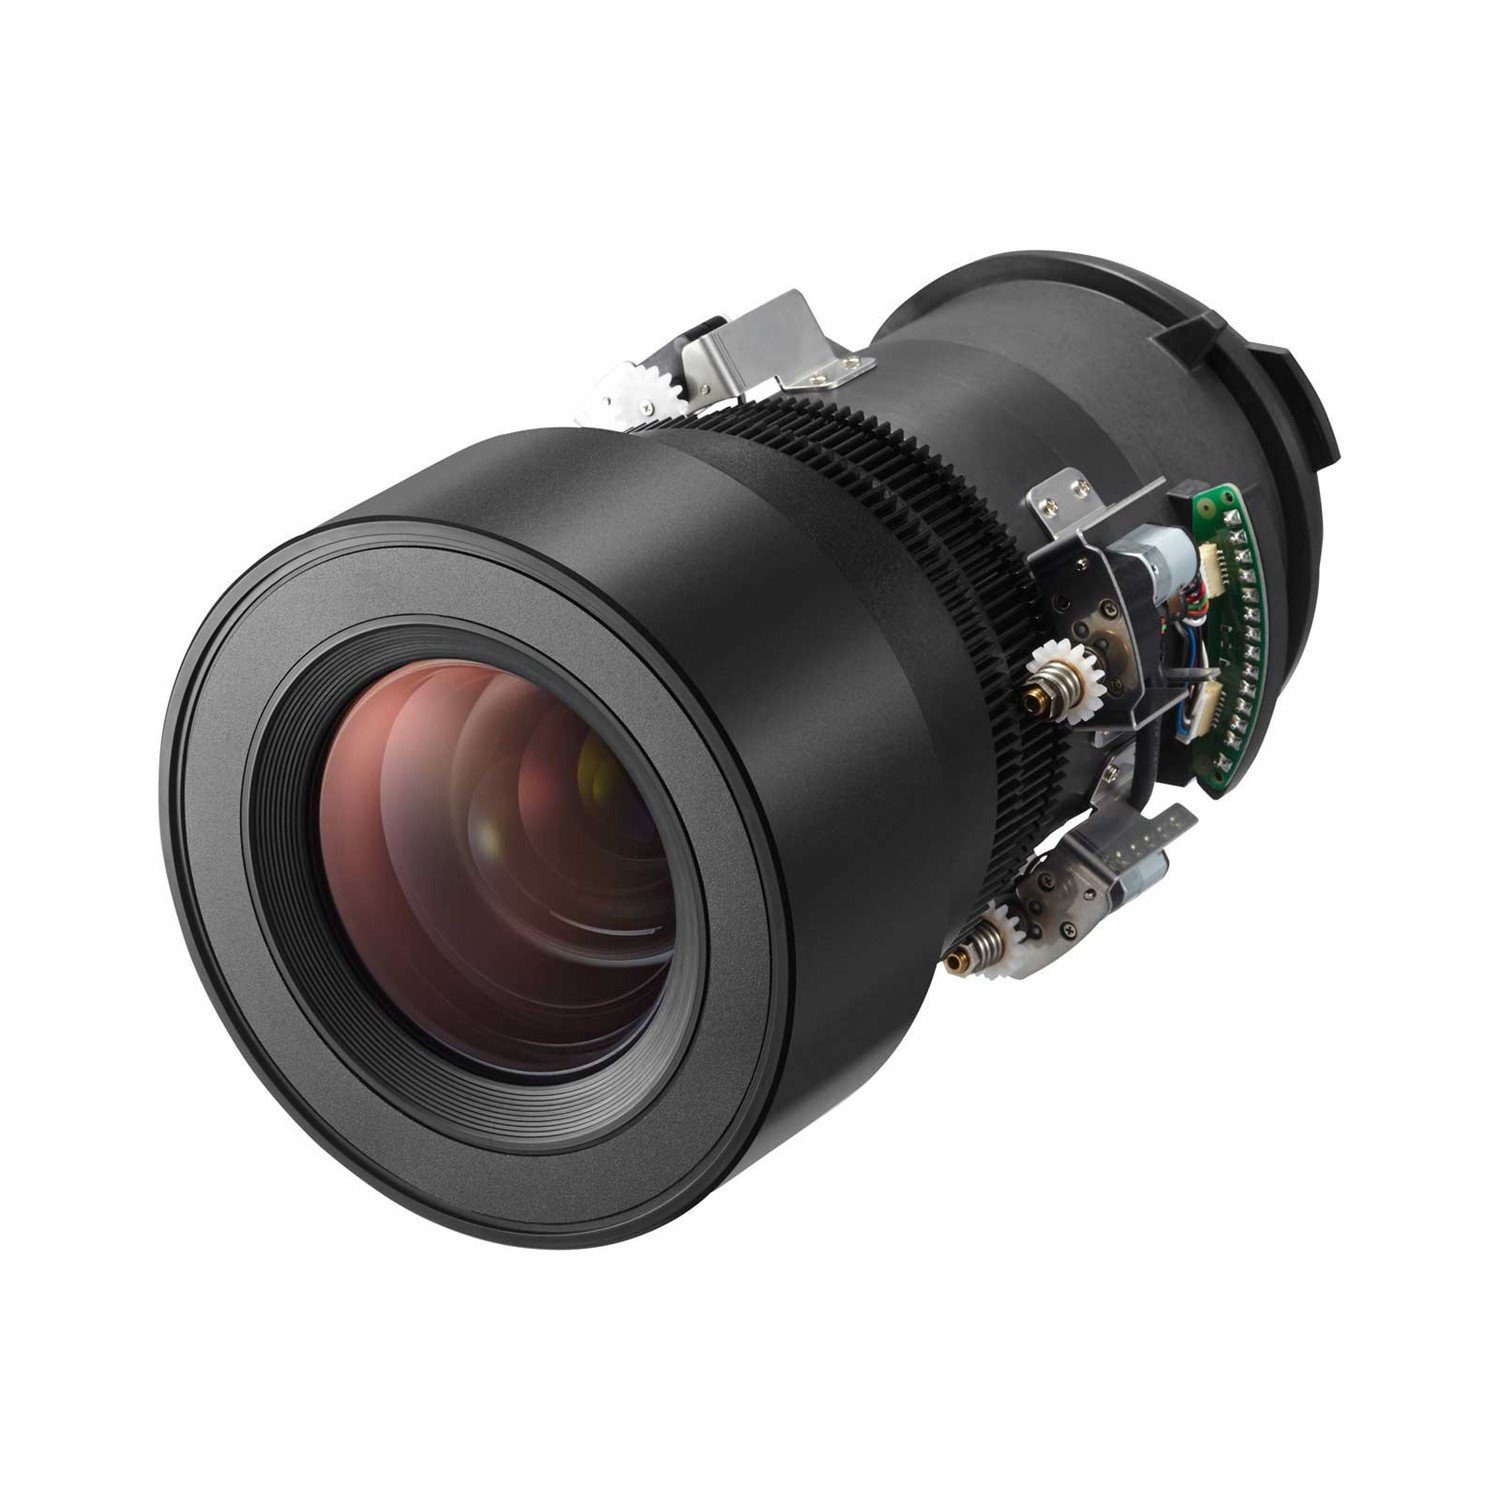 Nec Short Zoom Lens For Pa653ulg, Pa803ulg, Pa653ug, Pa703wg, Pa723ug, Pa803ug, Pa853wg, Pa703ulg